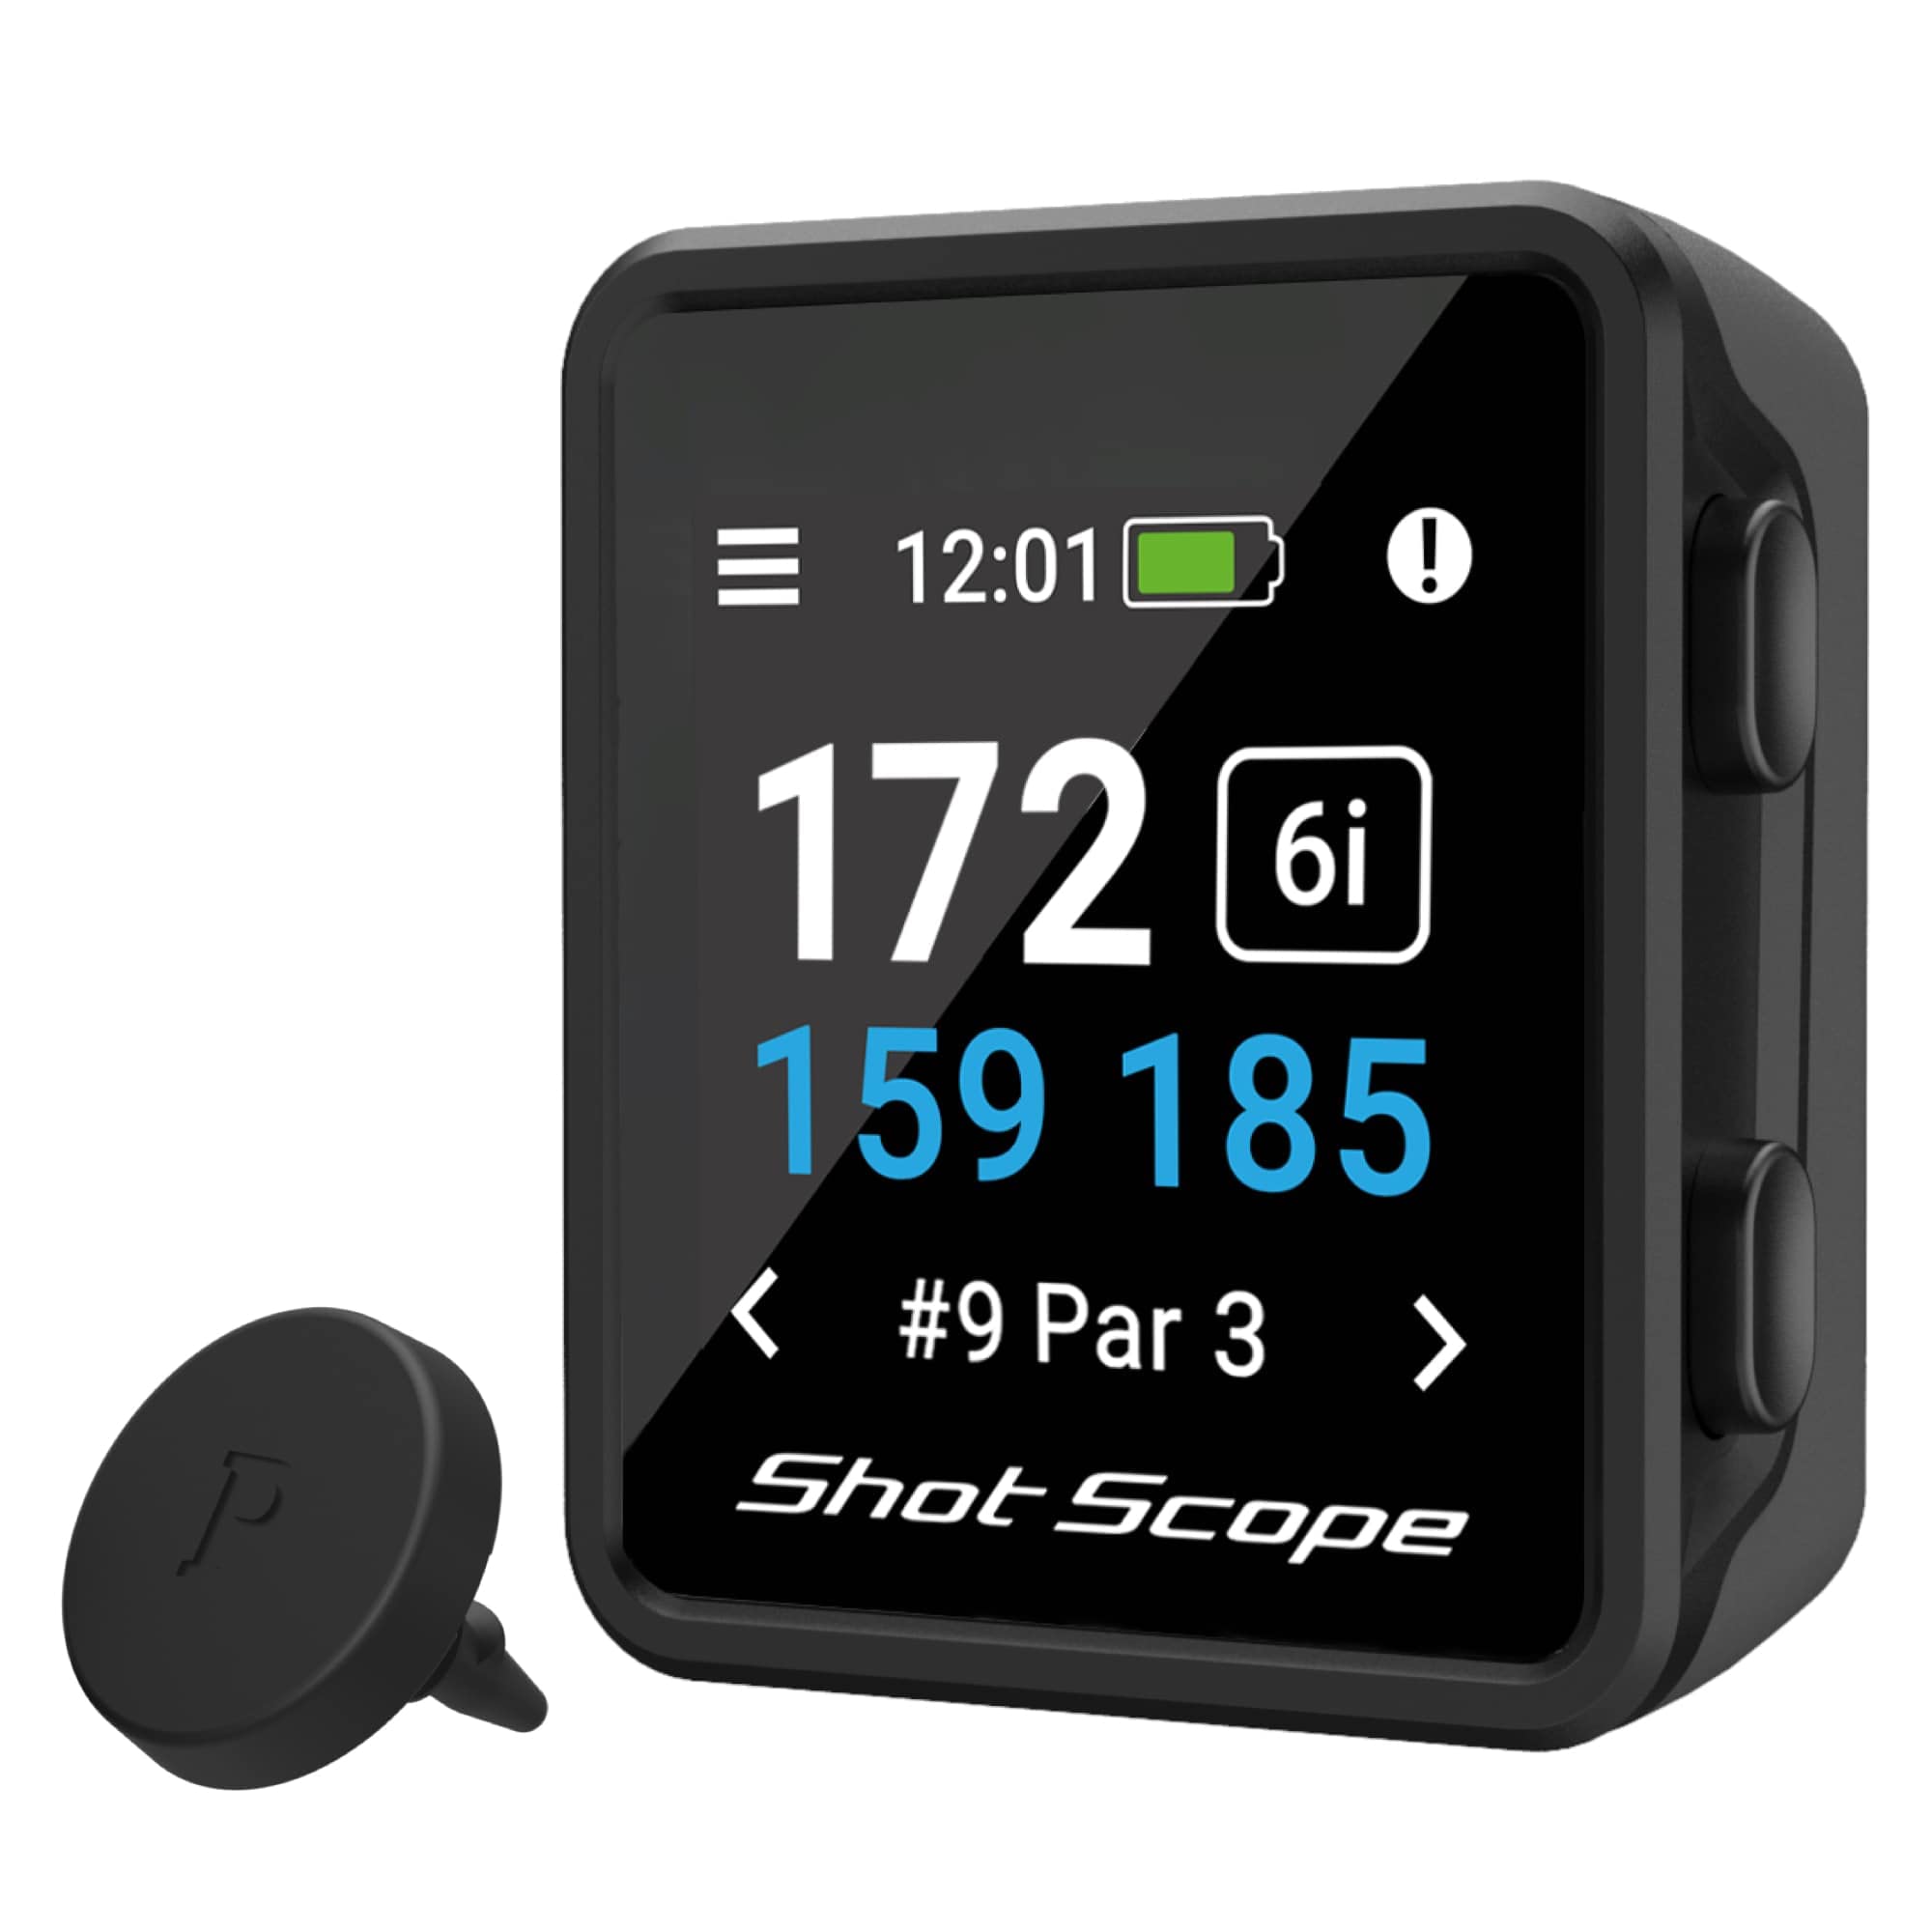  Shot Scope Technologies Shot Scope H4 GPS محمول باليد مع تتبع الطلقات - مسافات F / M / B الخضراء والمخاطر - أكثر من 36000 دورة محملة مسبقًا...